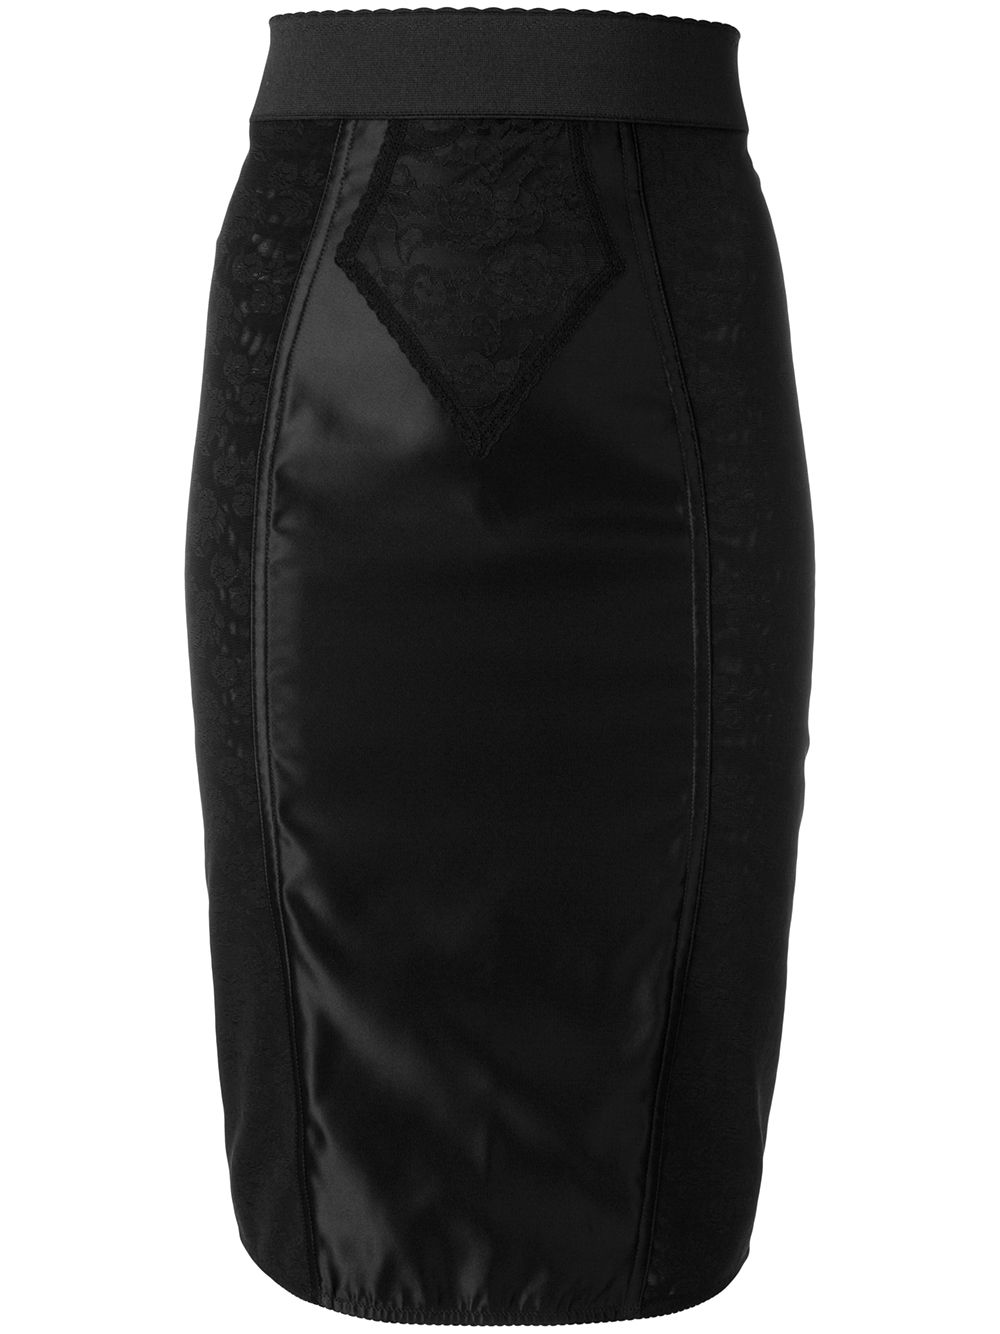 Dolce & Gabbana Panelled Lace Pencil Skirt - Farfetch